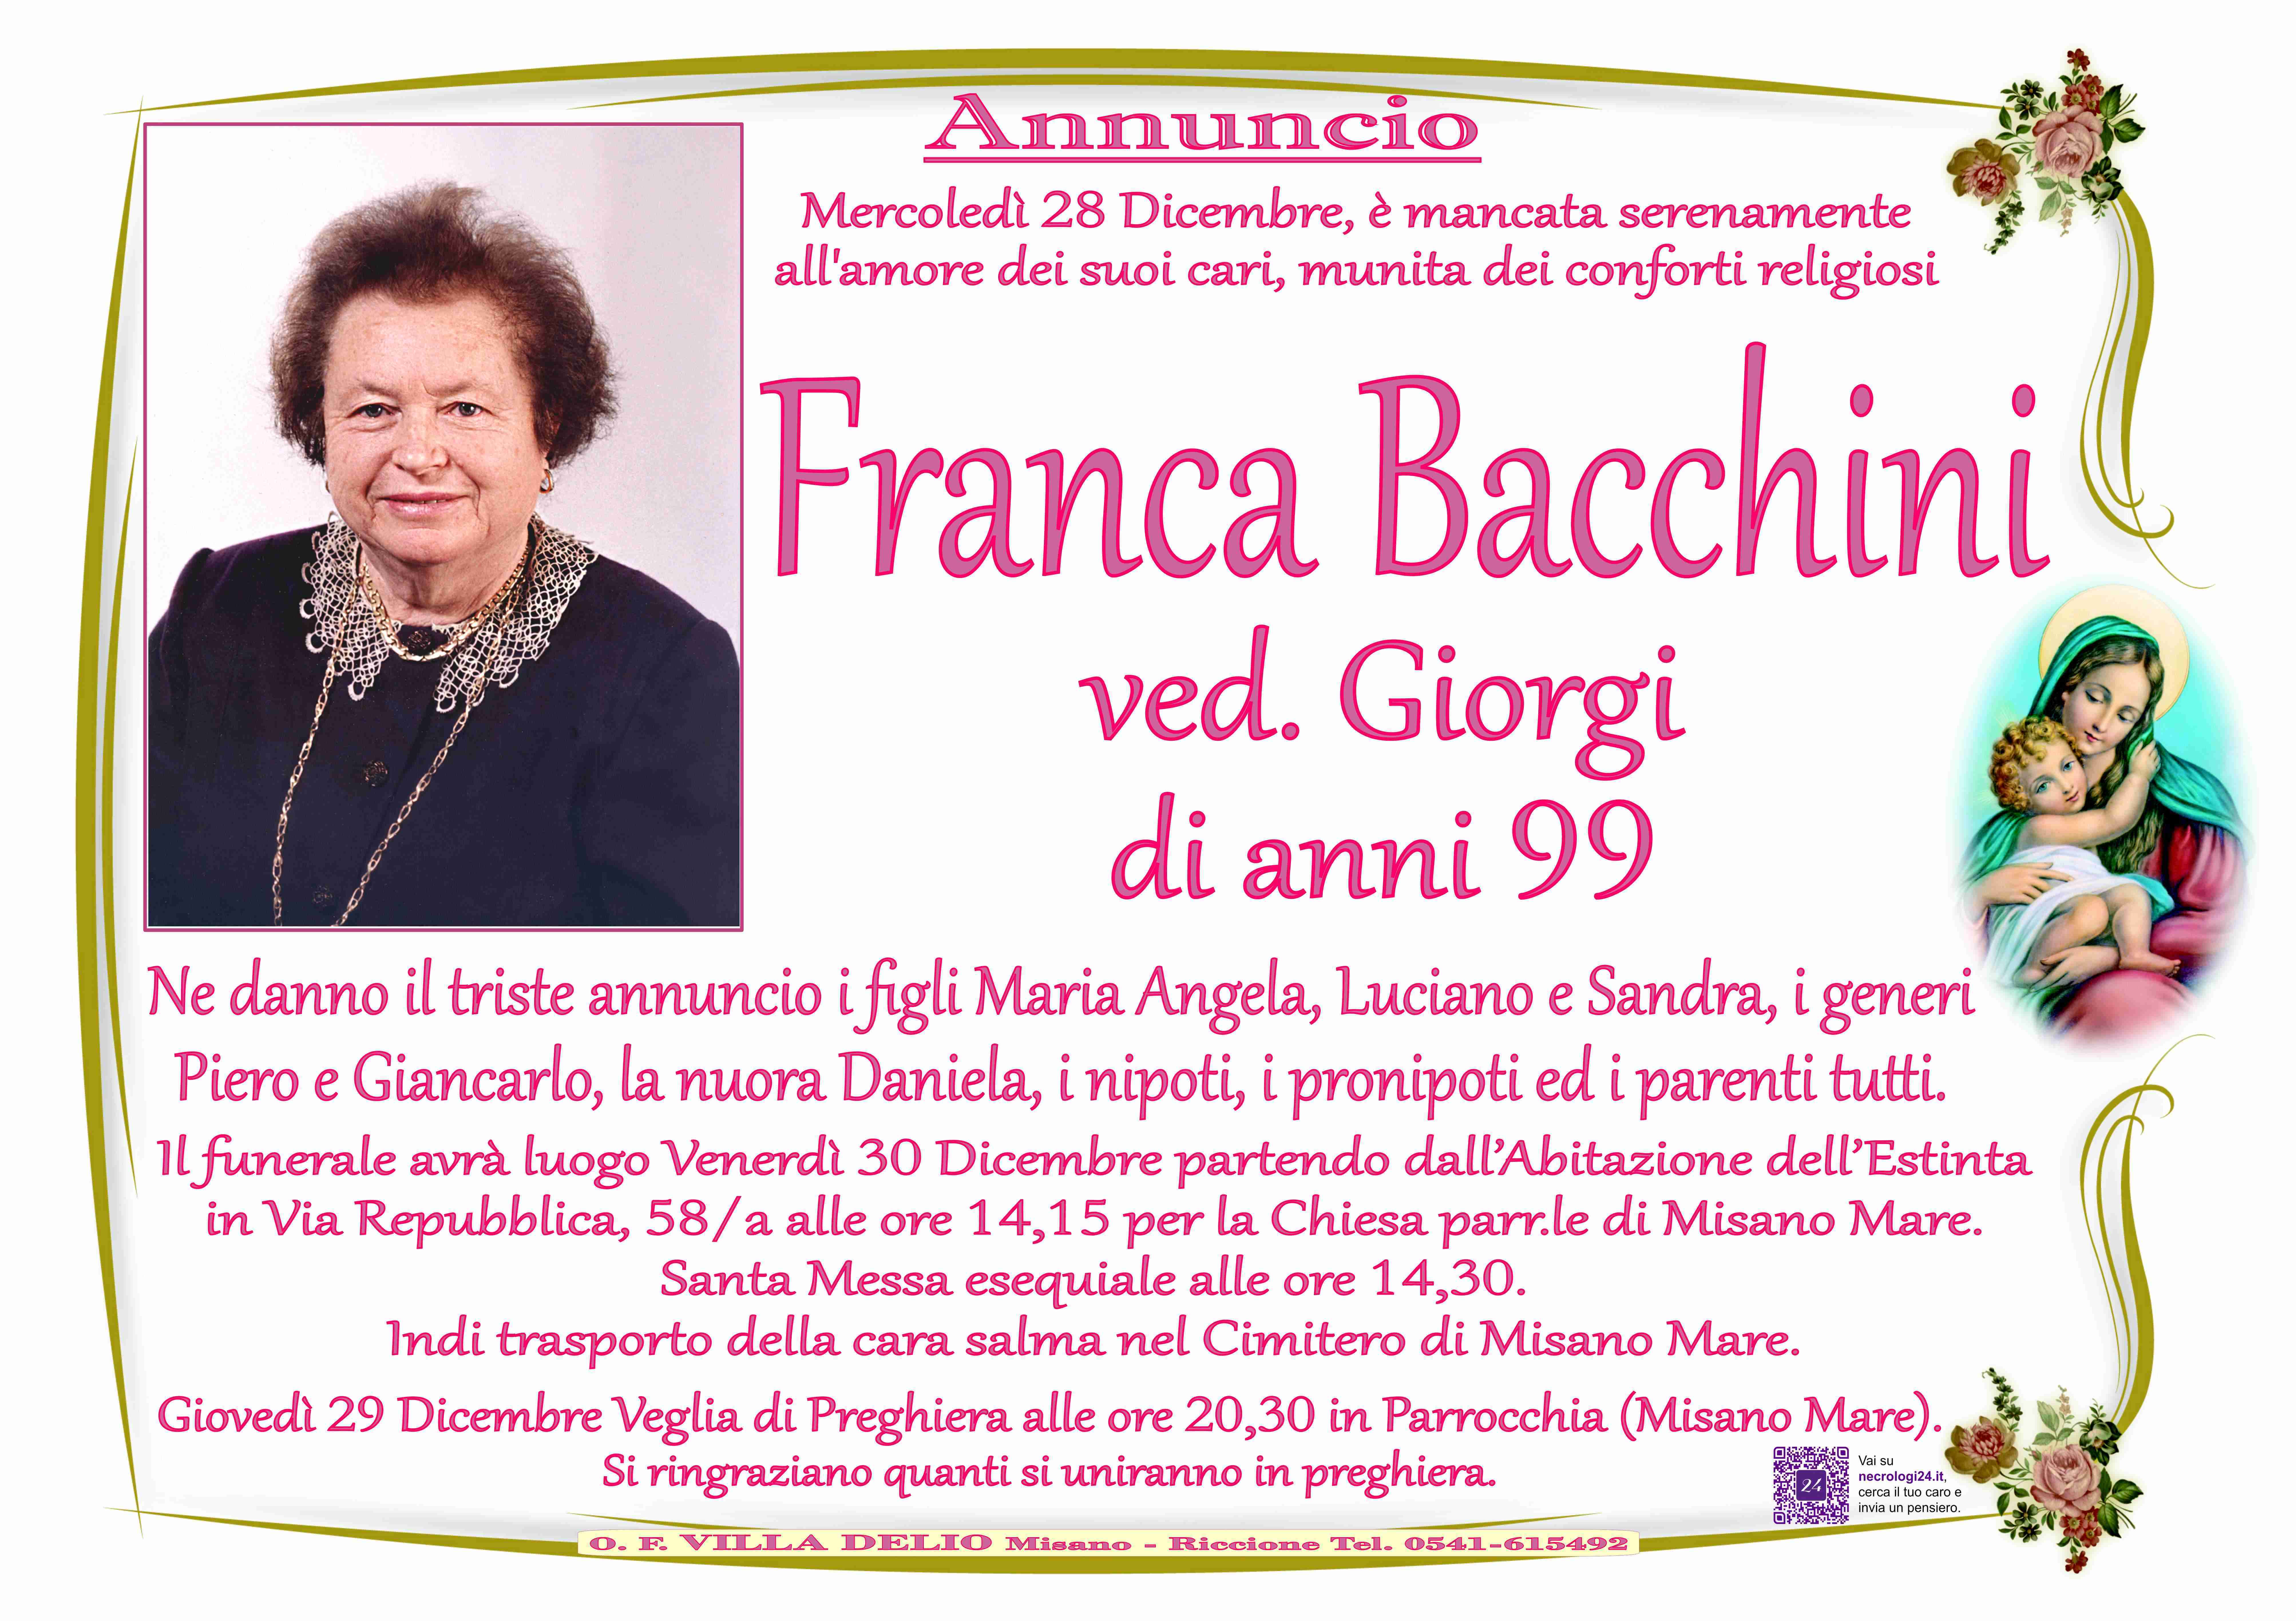 Franca Bacchini